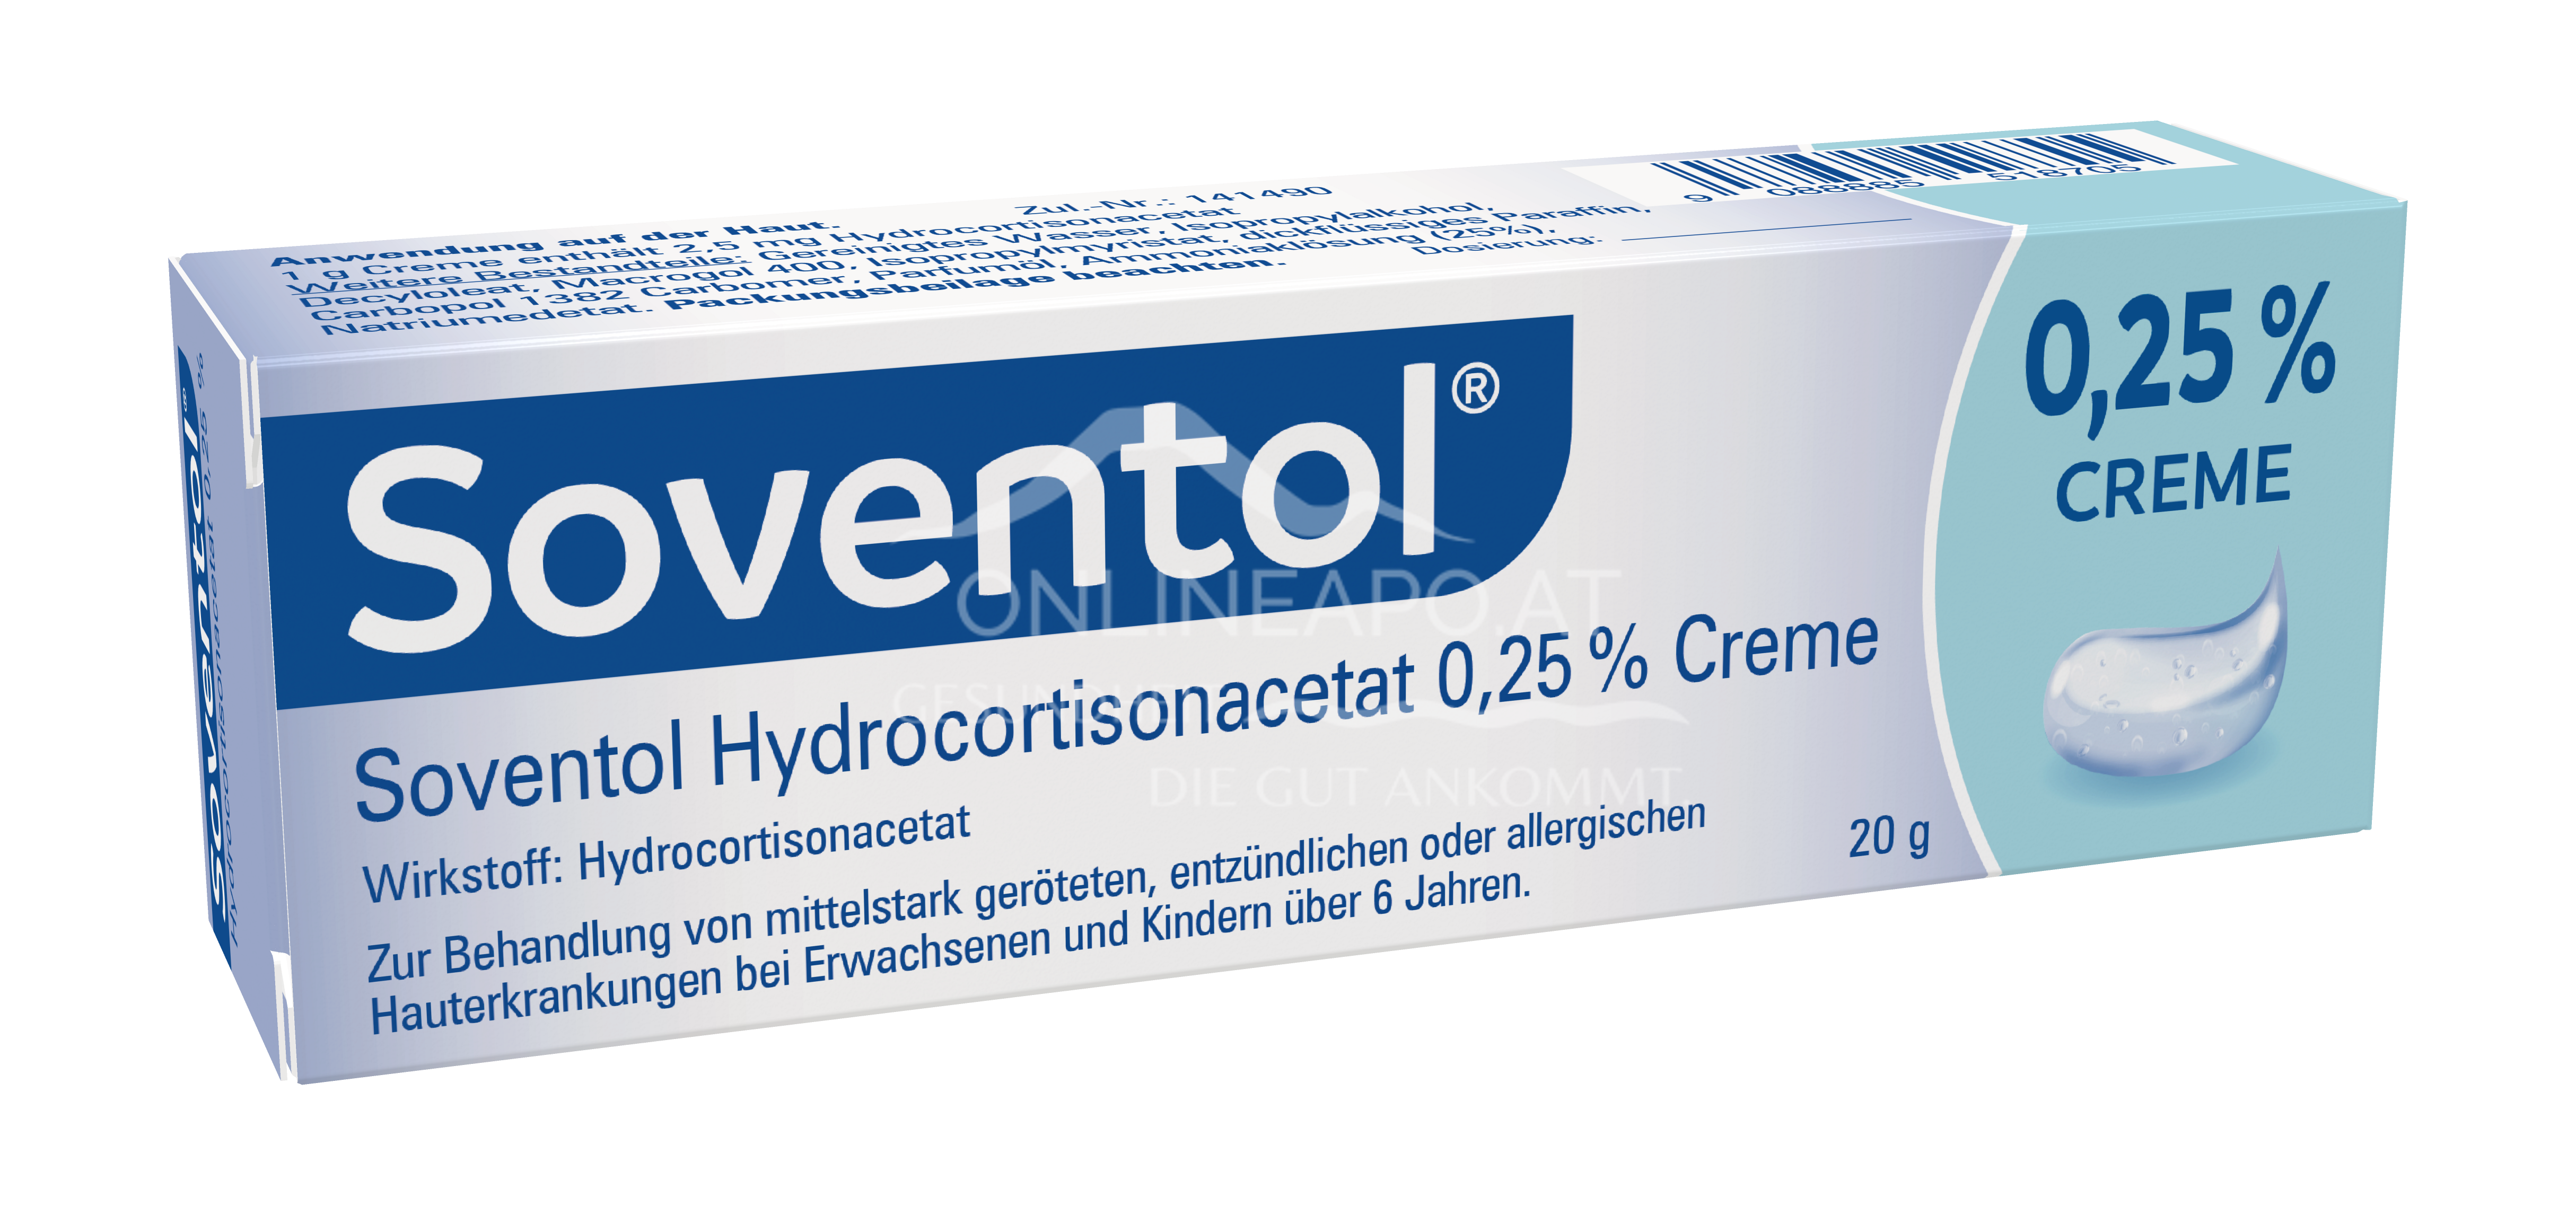 Soventol Hydrocortisonacetat 0,25 % Creme